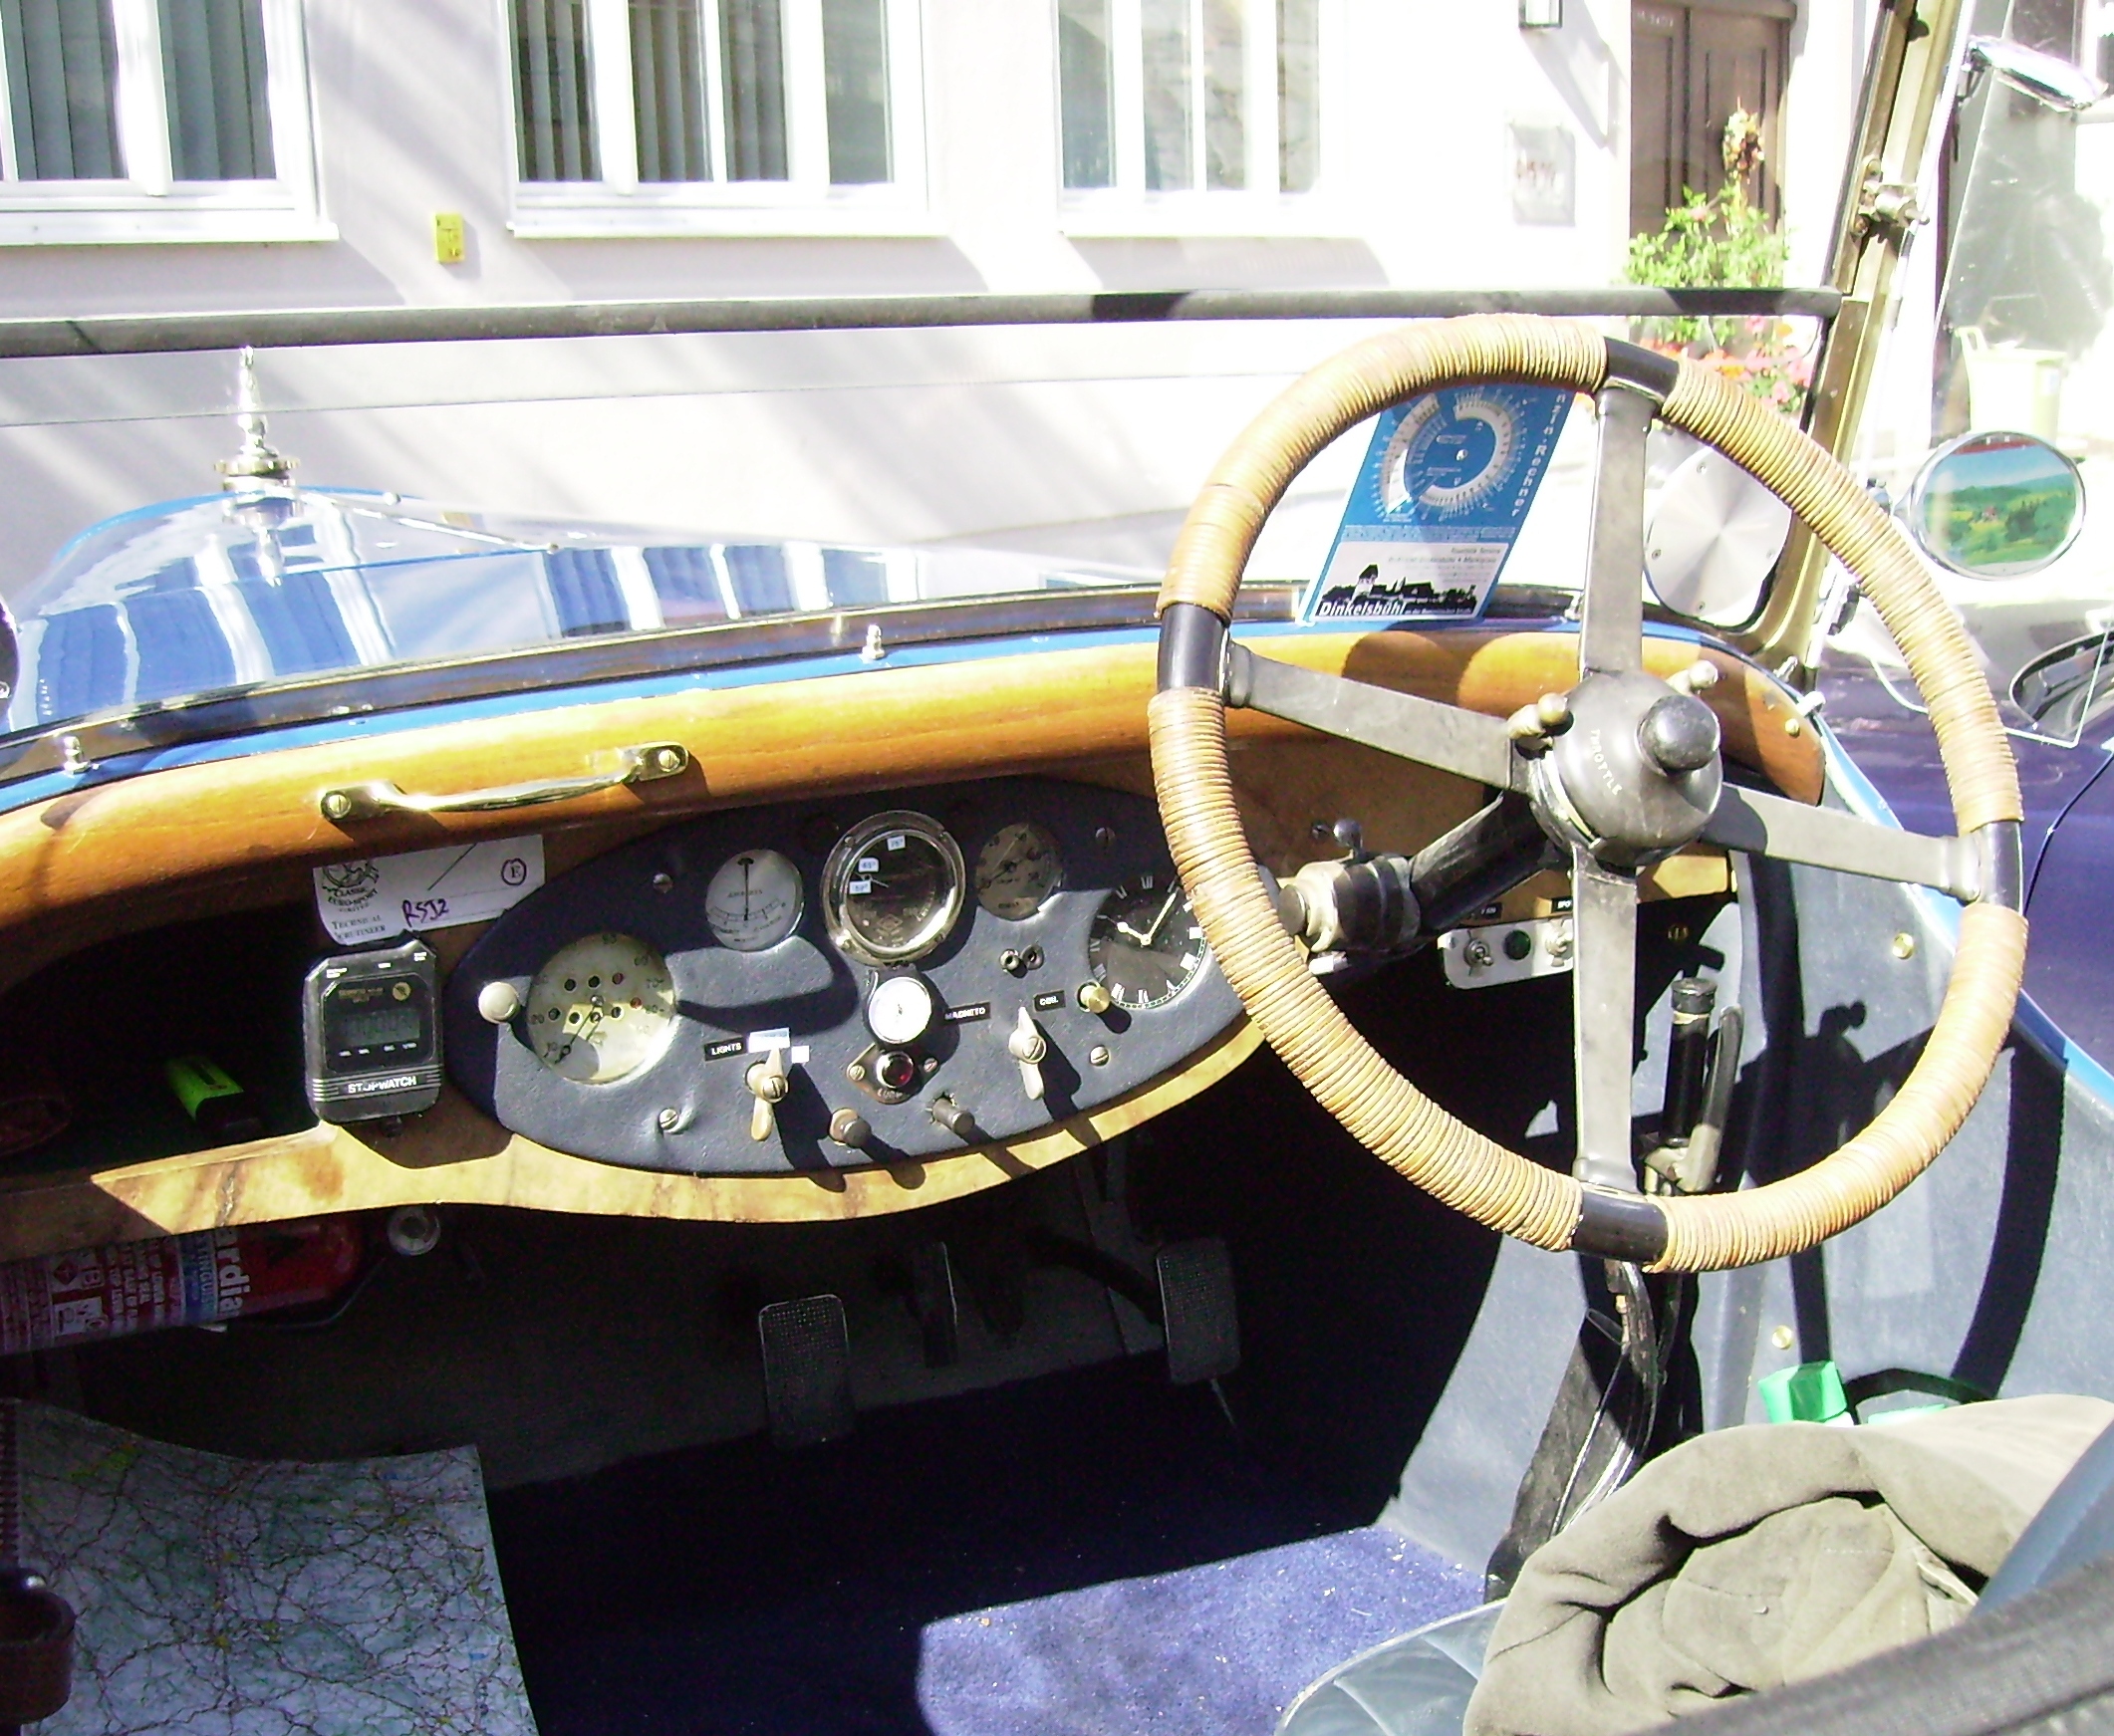 File:Alvis Silver Eagle cockpit.JPG - Wikimedia Commons